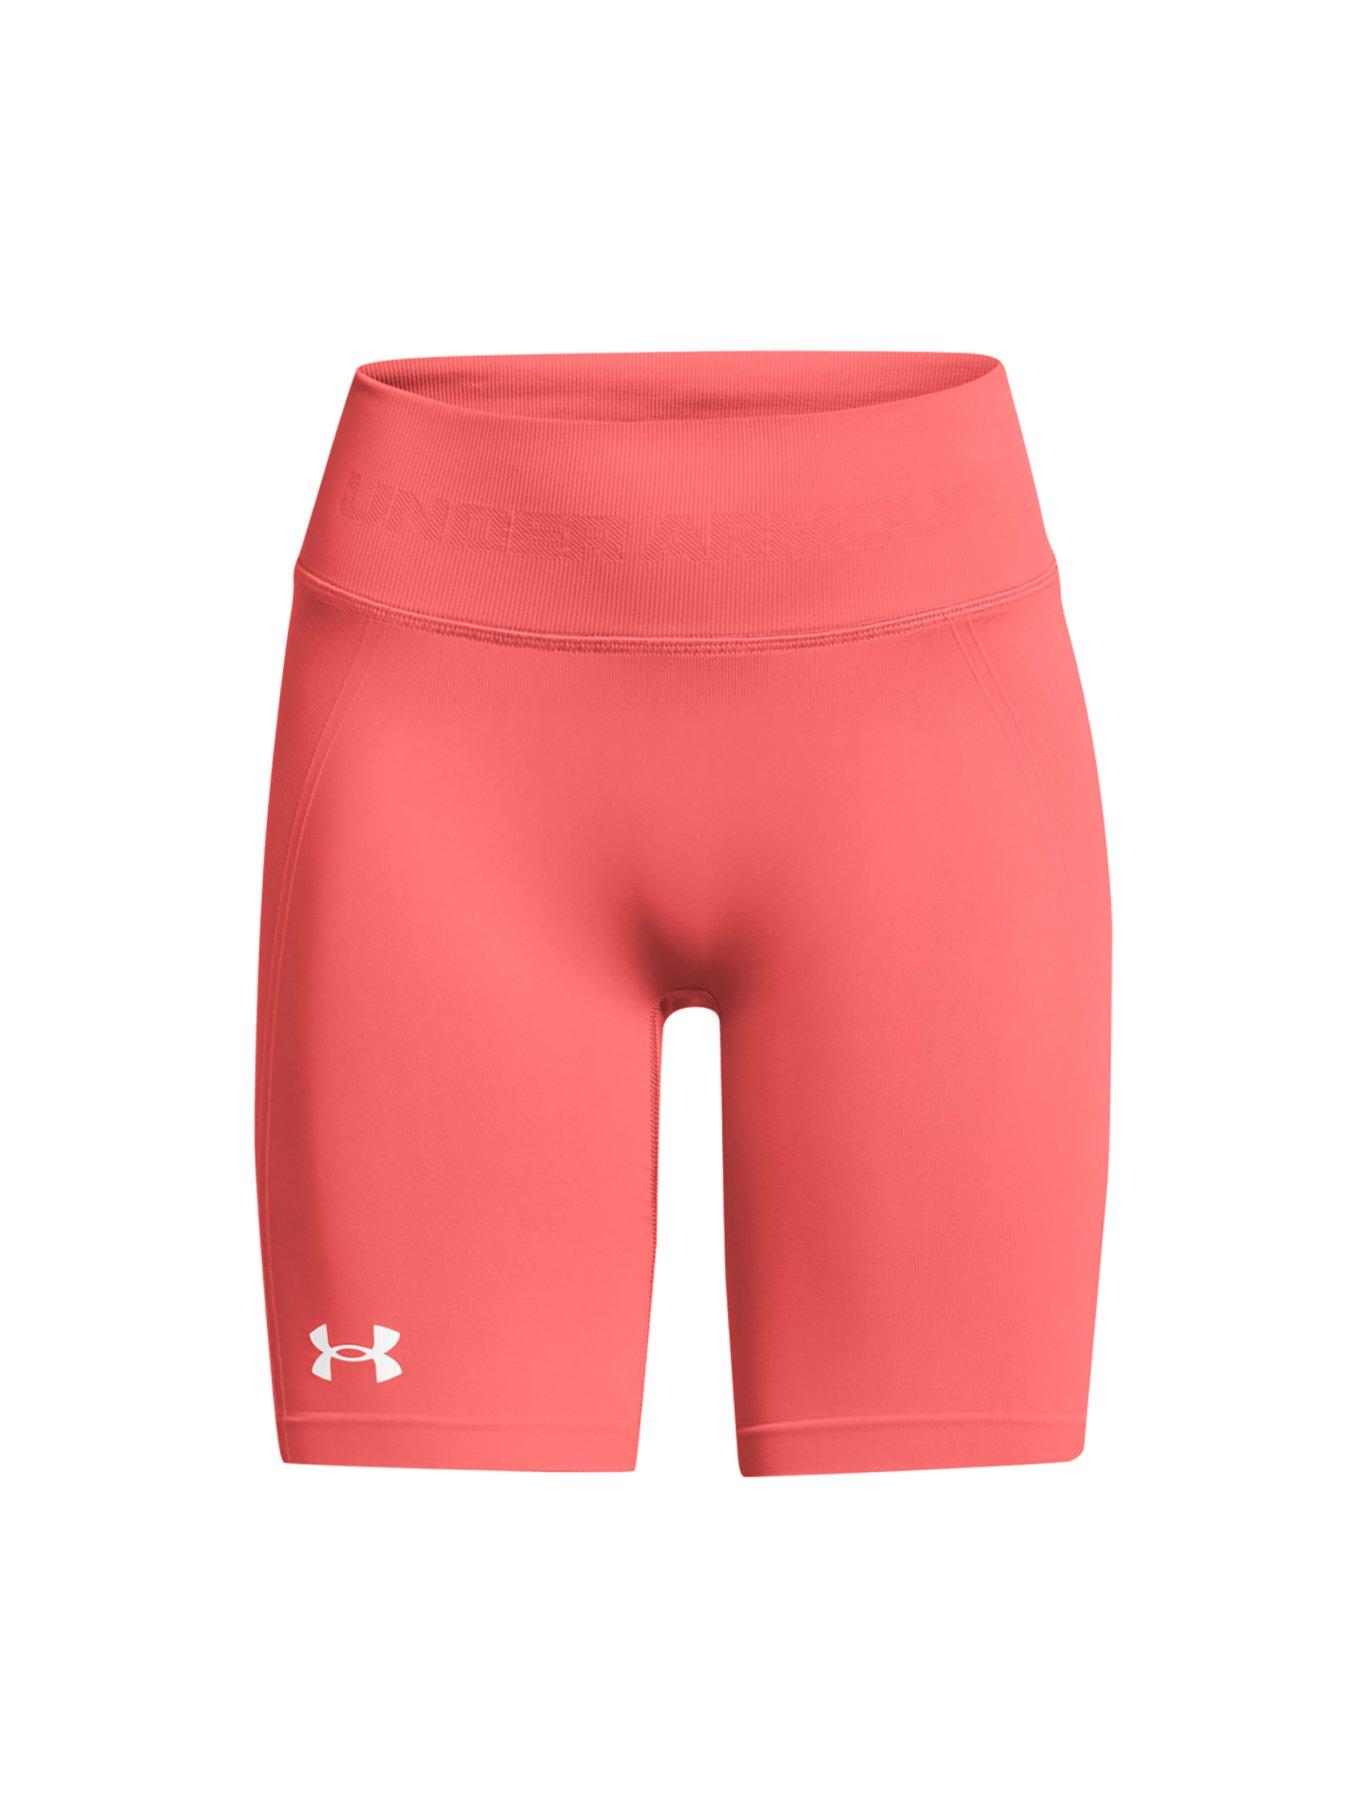 Women's 13 Long Slip Shorts Seamless Bermuda Layering Gusset Shorts